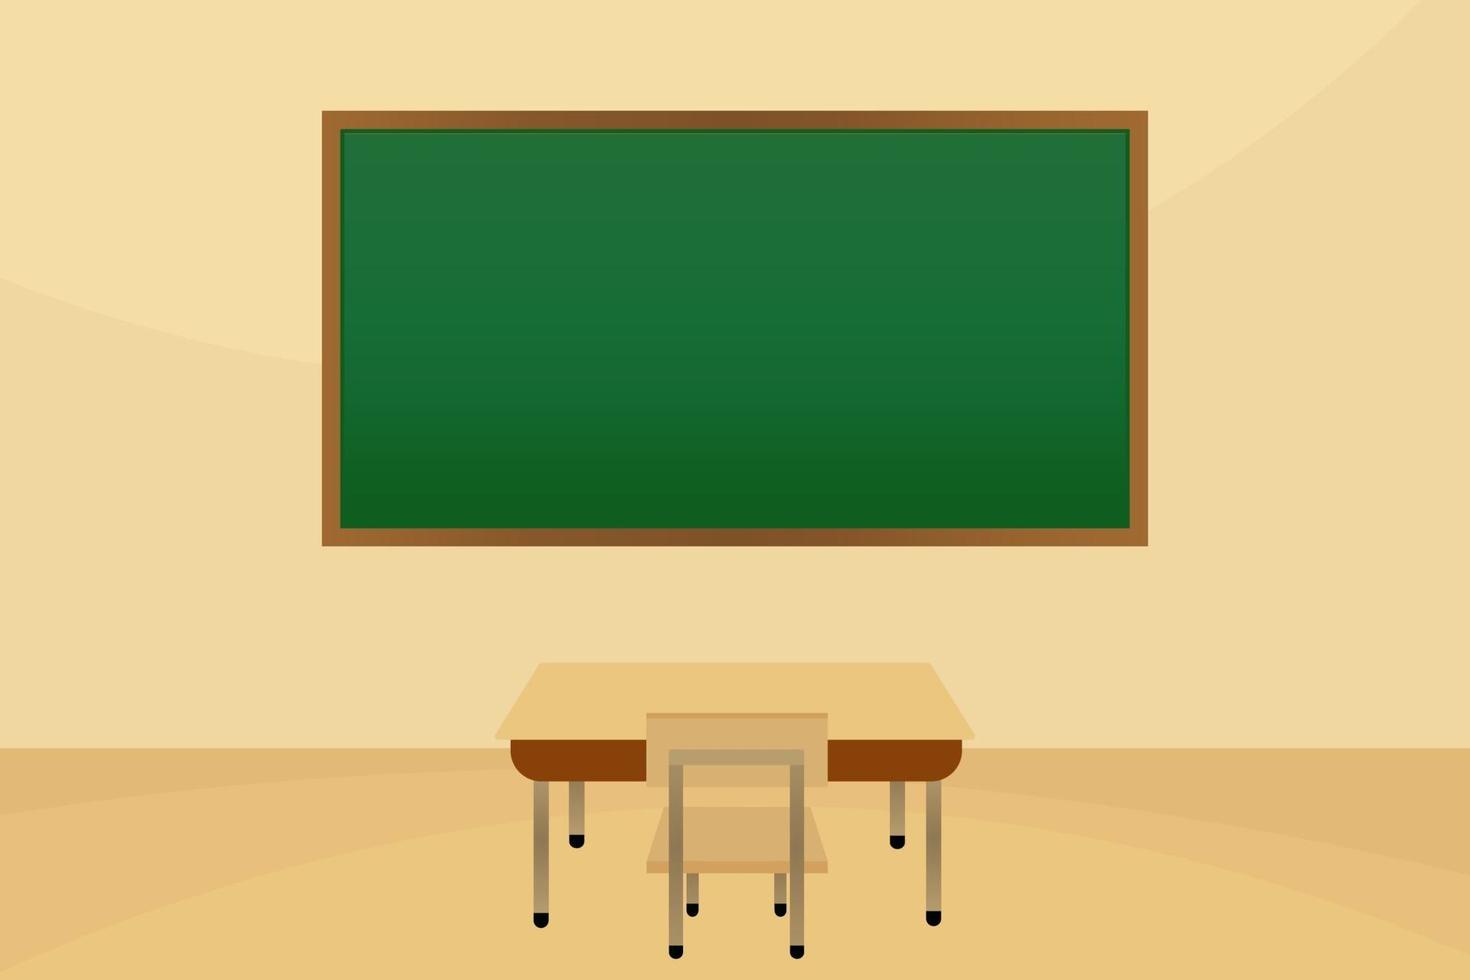 Green School Chalkboard With School Table vector